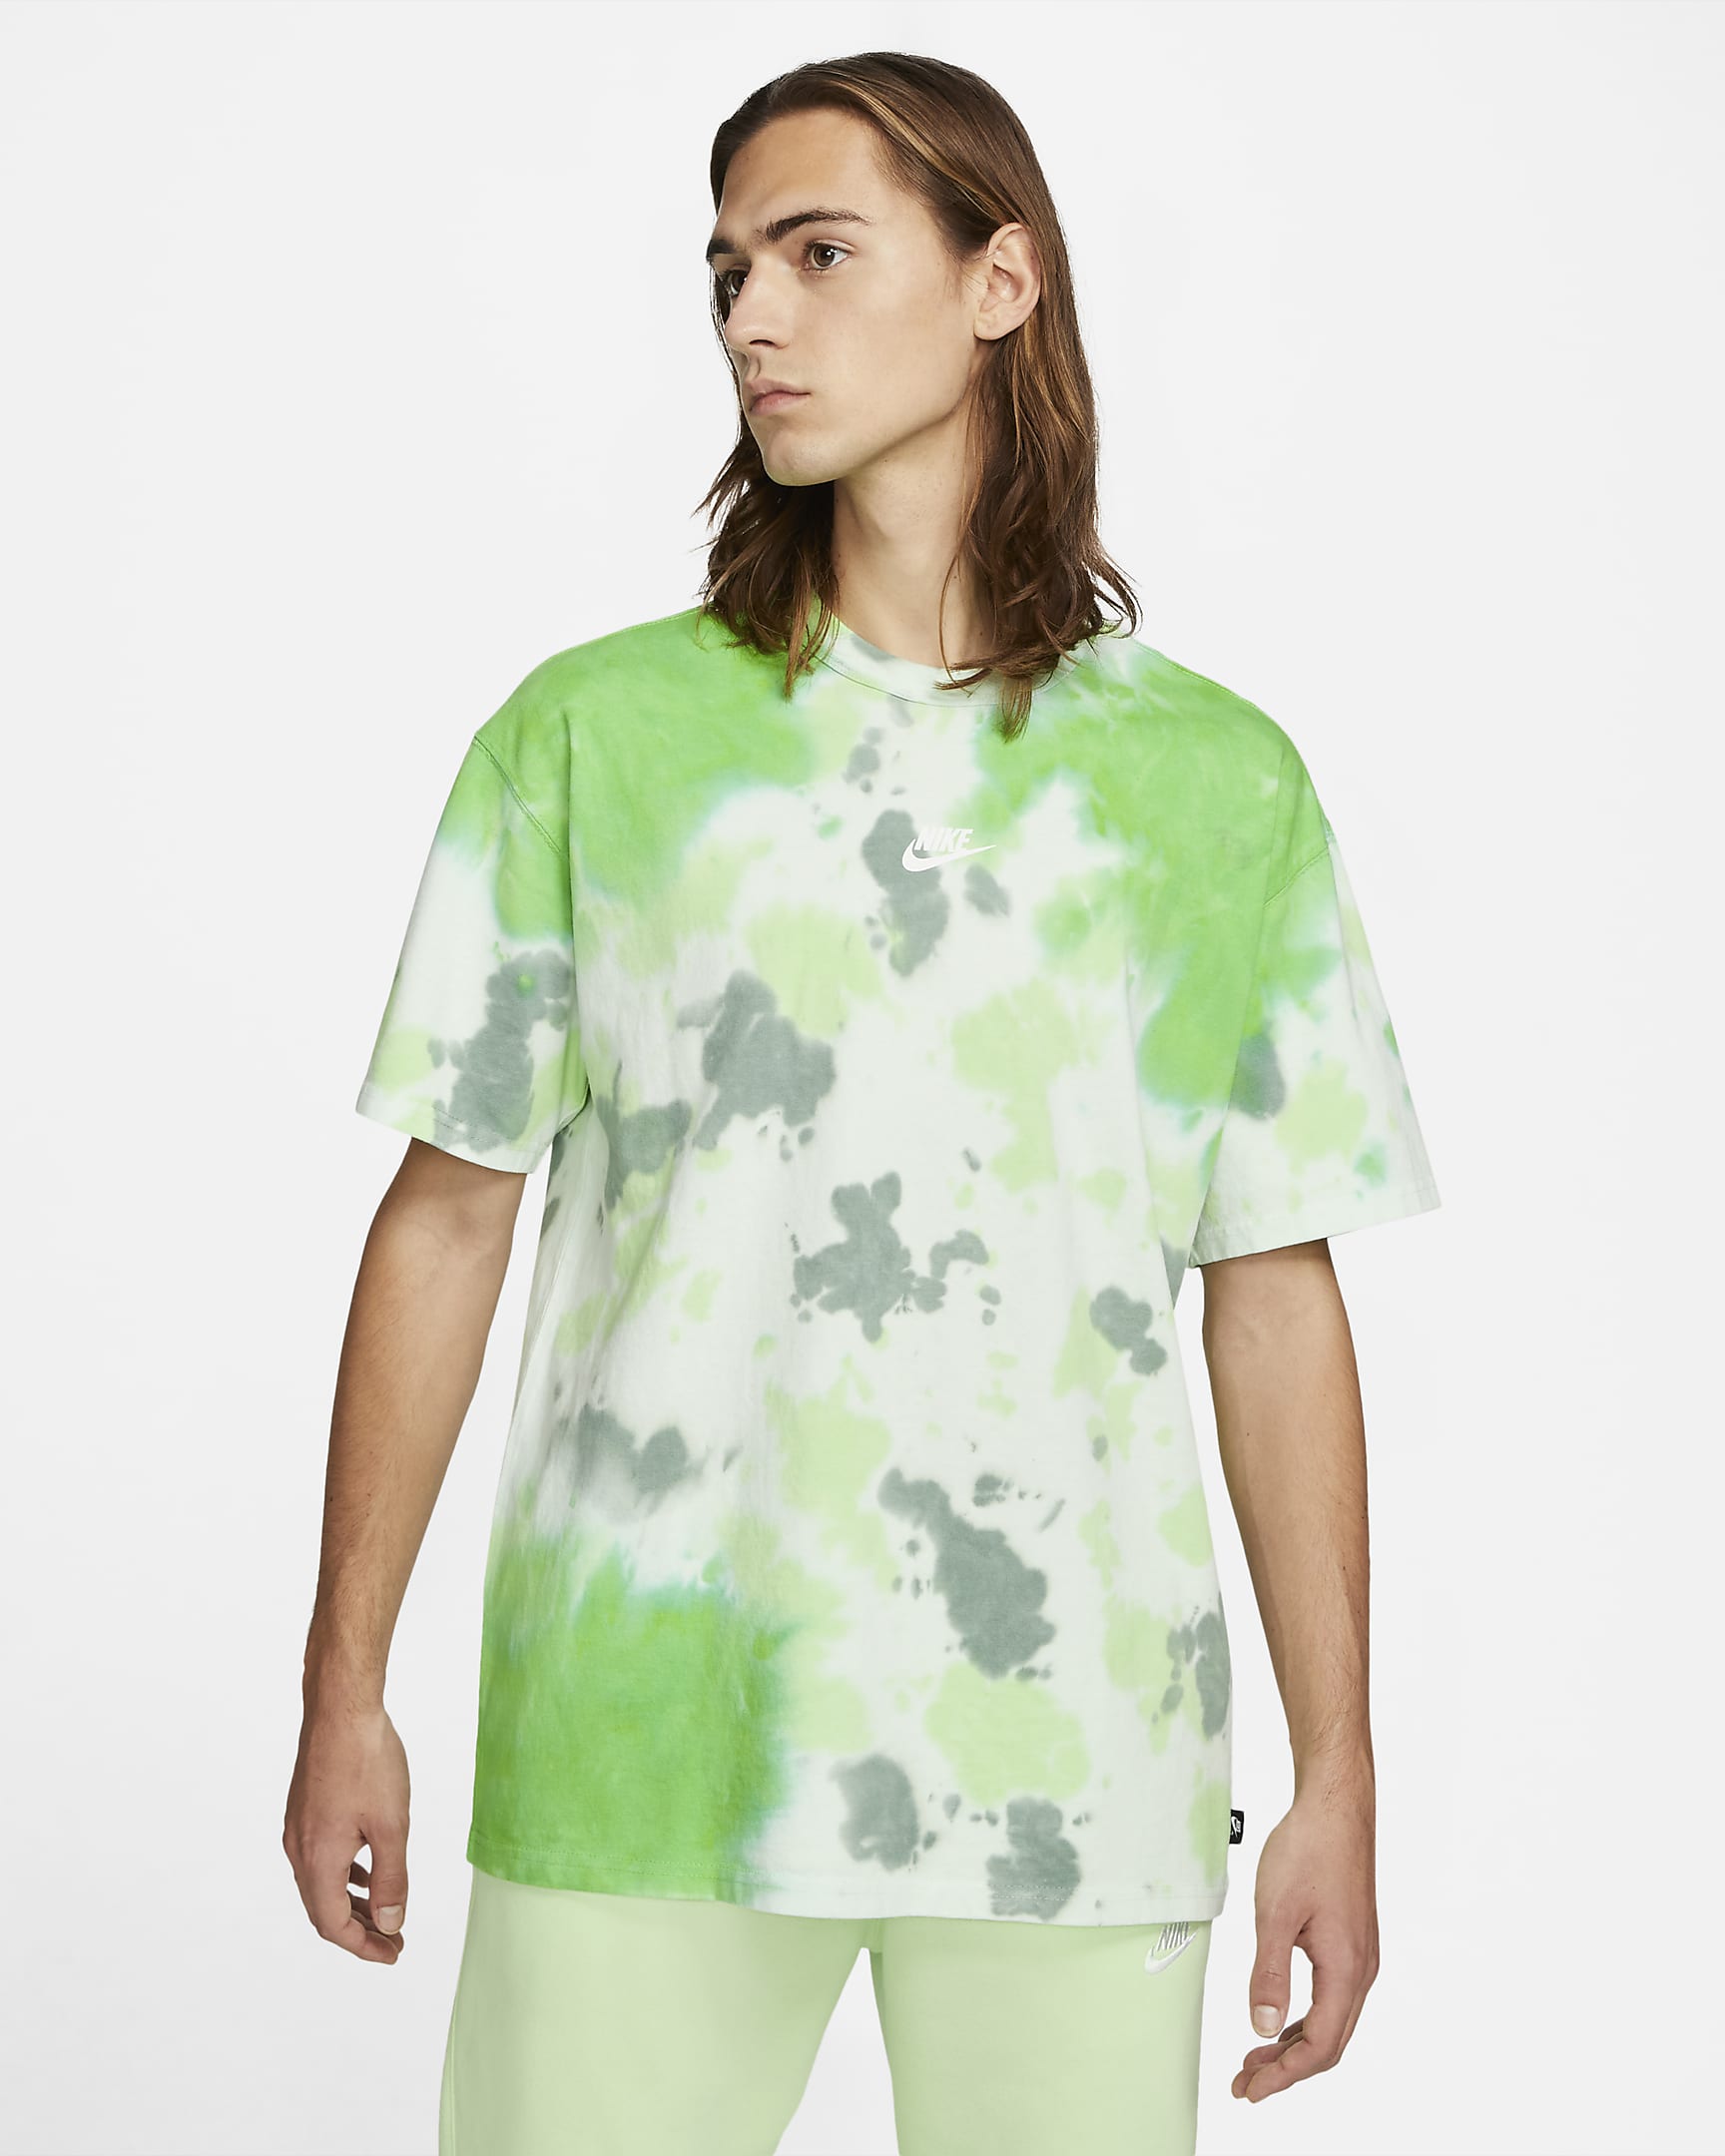 Nike Air Huarache Scream Green 2021 Shirts Outfits to Match